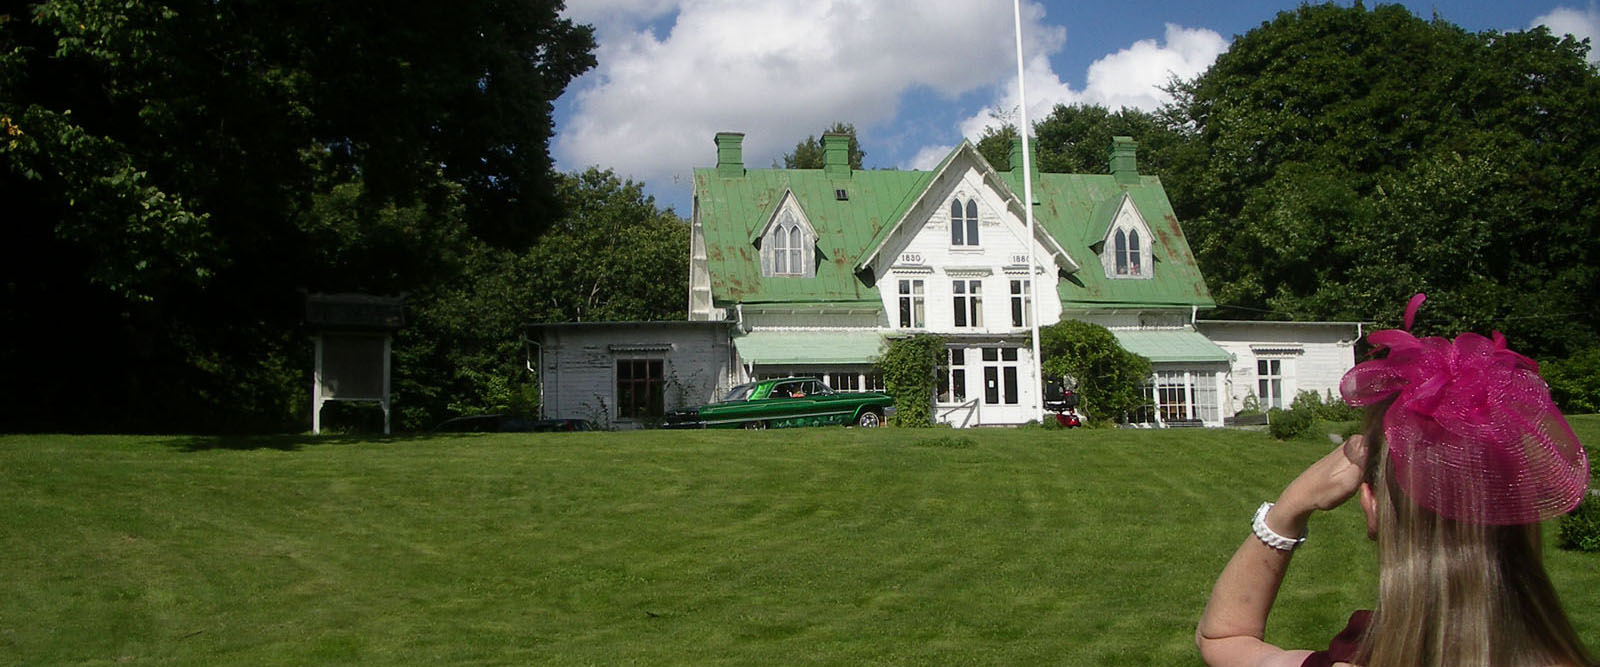 Vargön, Villa Björkås, björkåsparken, 2012